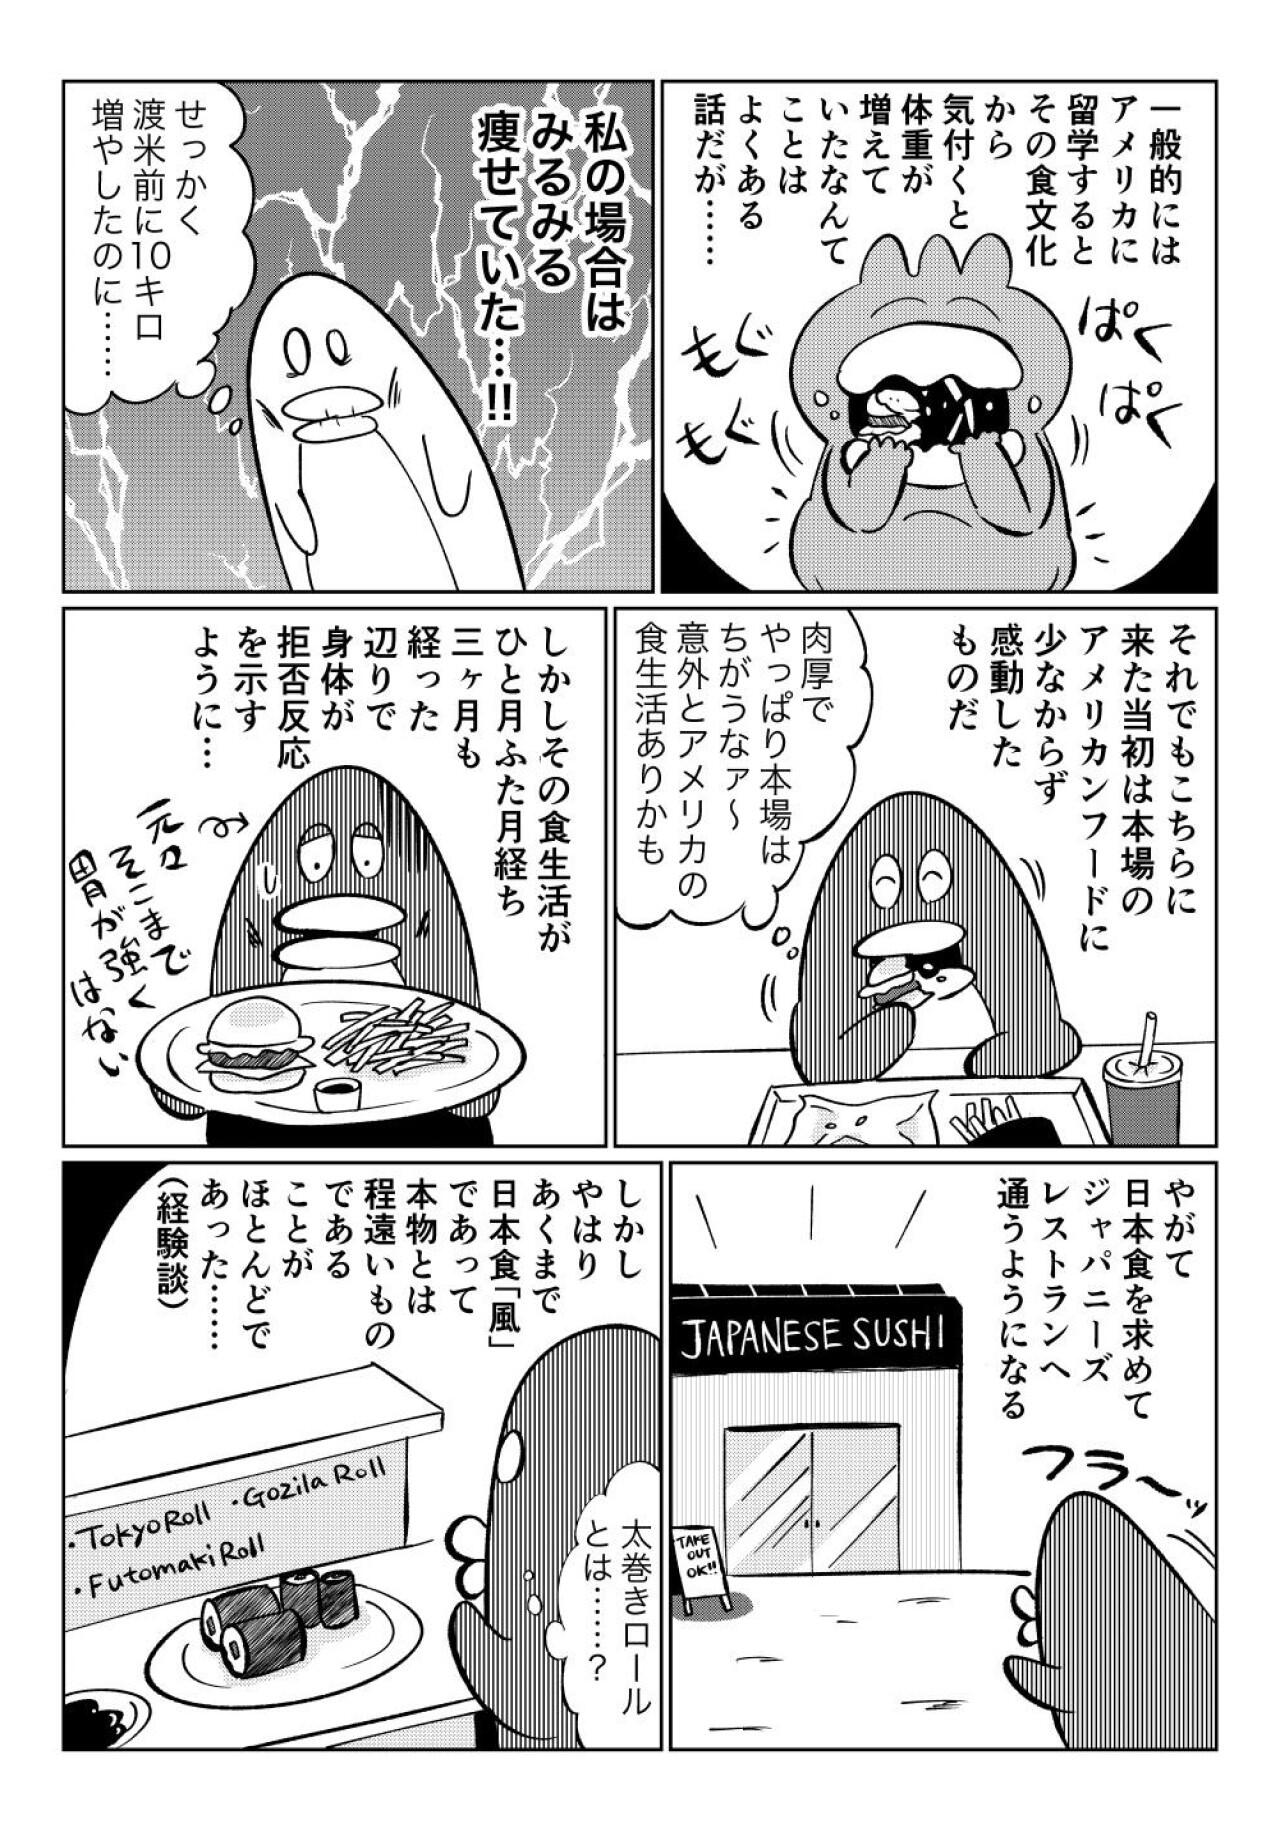 https://www.ryugaku.co.jp/column/images/34sai14_2_1280.jpg